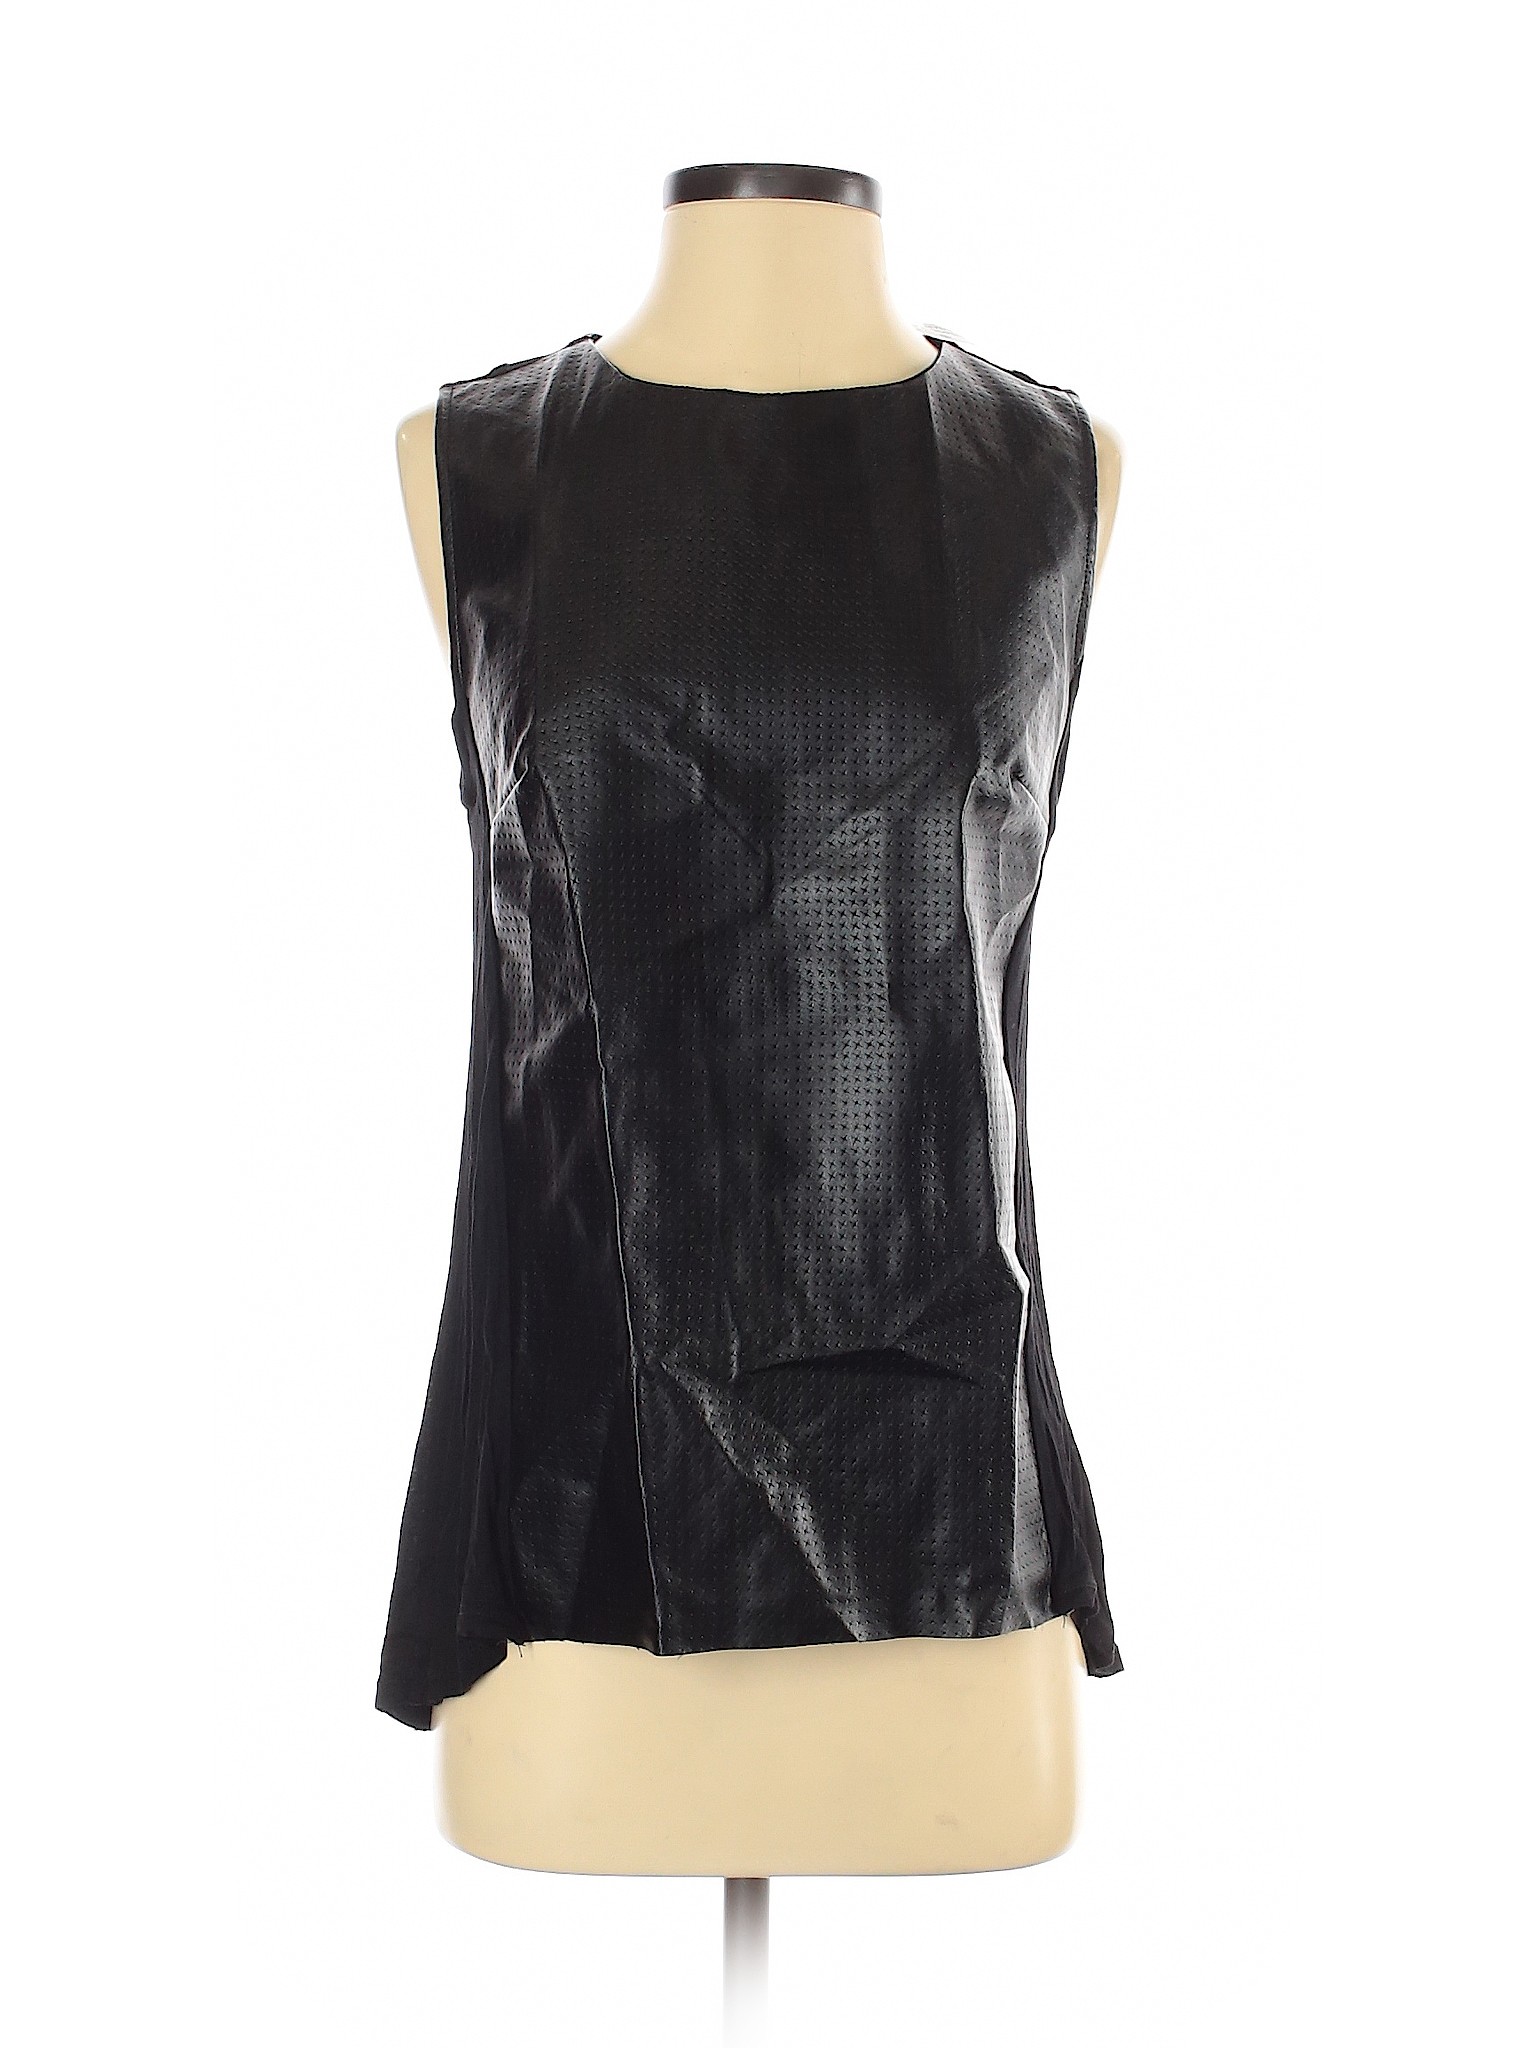 Do & Be Women Black Faux Leather Top S | eBay